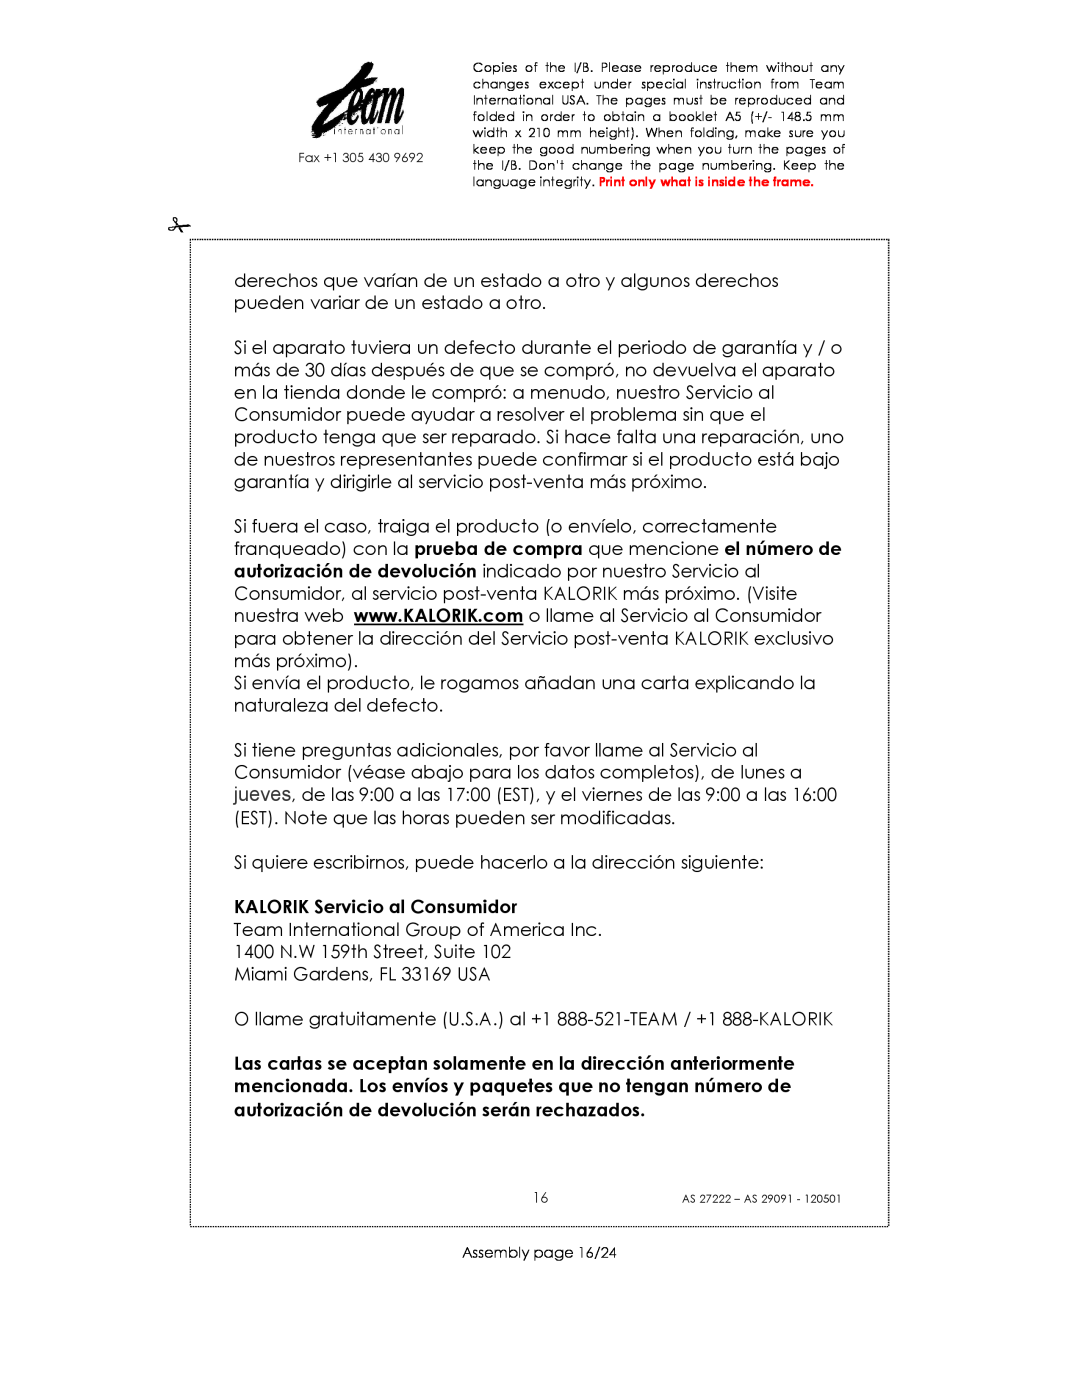 Kalorik AS 29091, AS 27222 manual KALORIK Servicio al Consumidor, Assembly page 16/24 